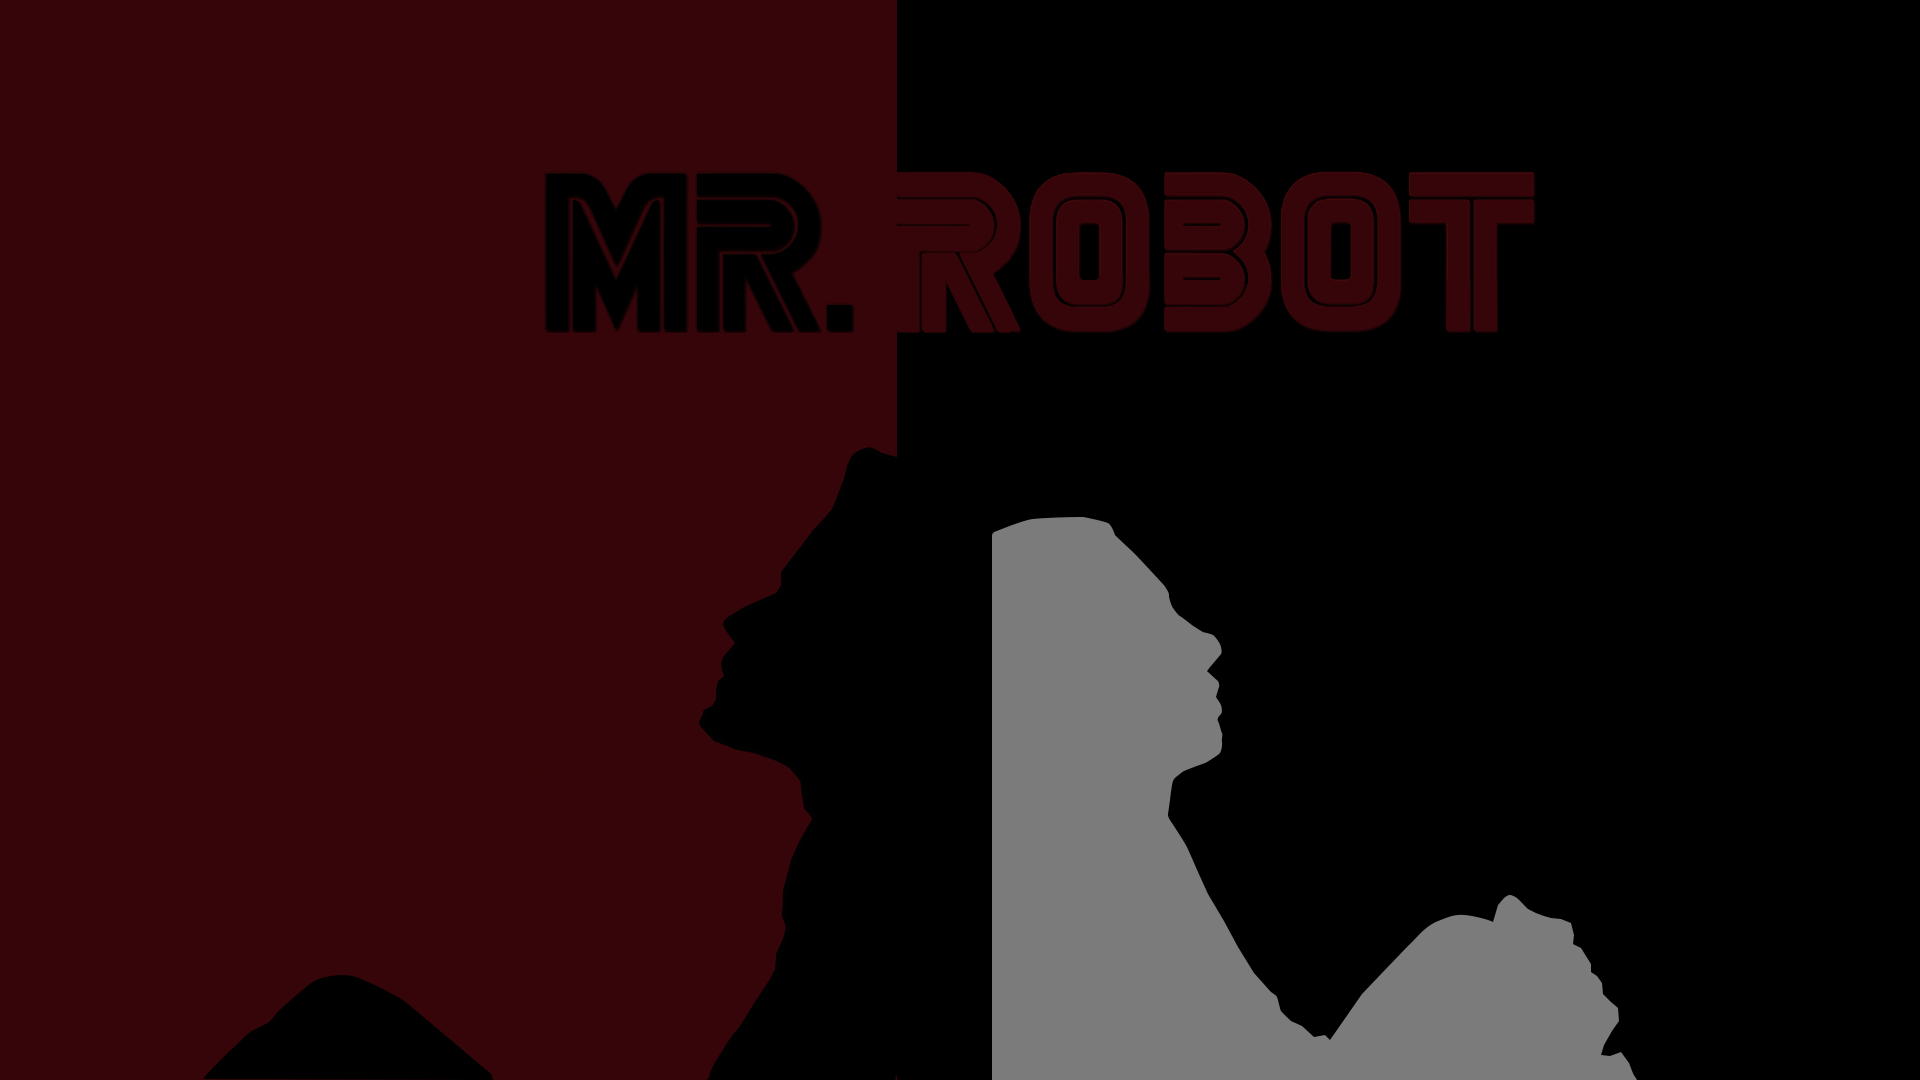 Mr Robot Minimalist 4K Wallpapers